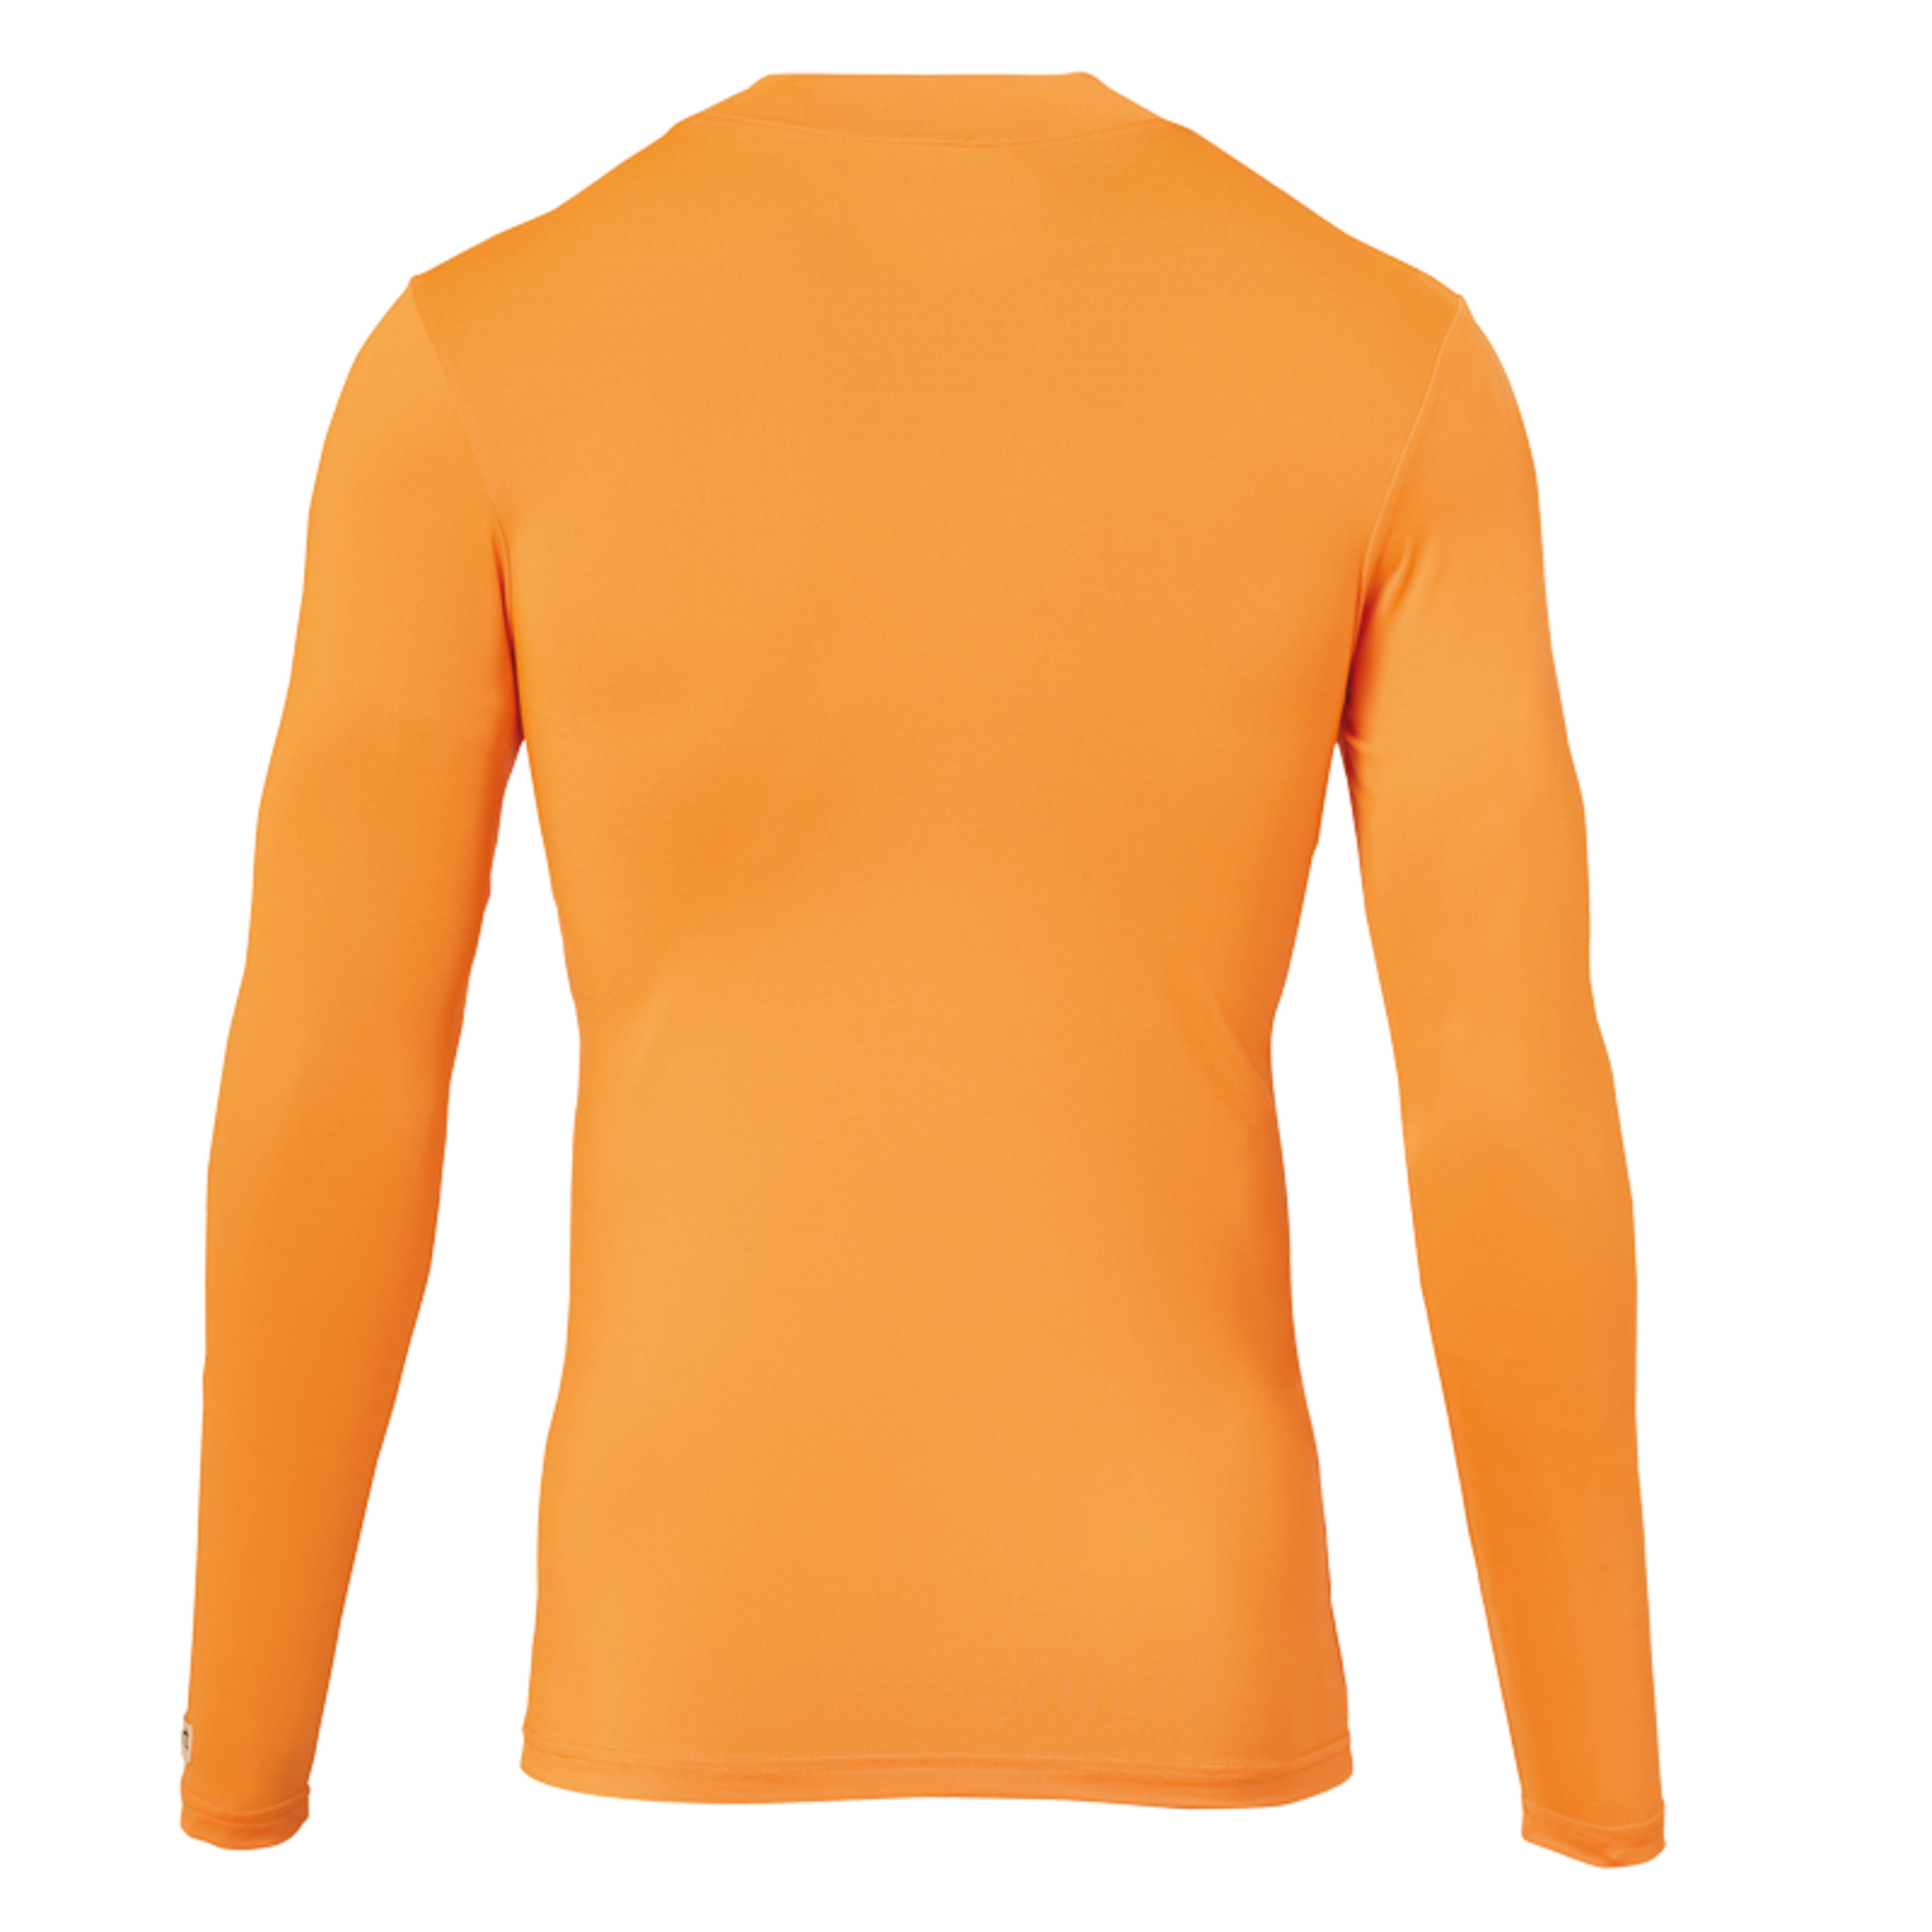 Uhlsport Baselayer Shirt Ls Naranja Pálido Uhlsport